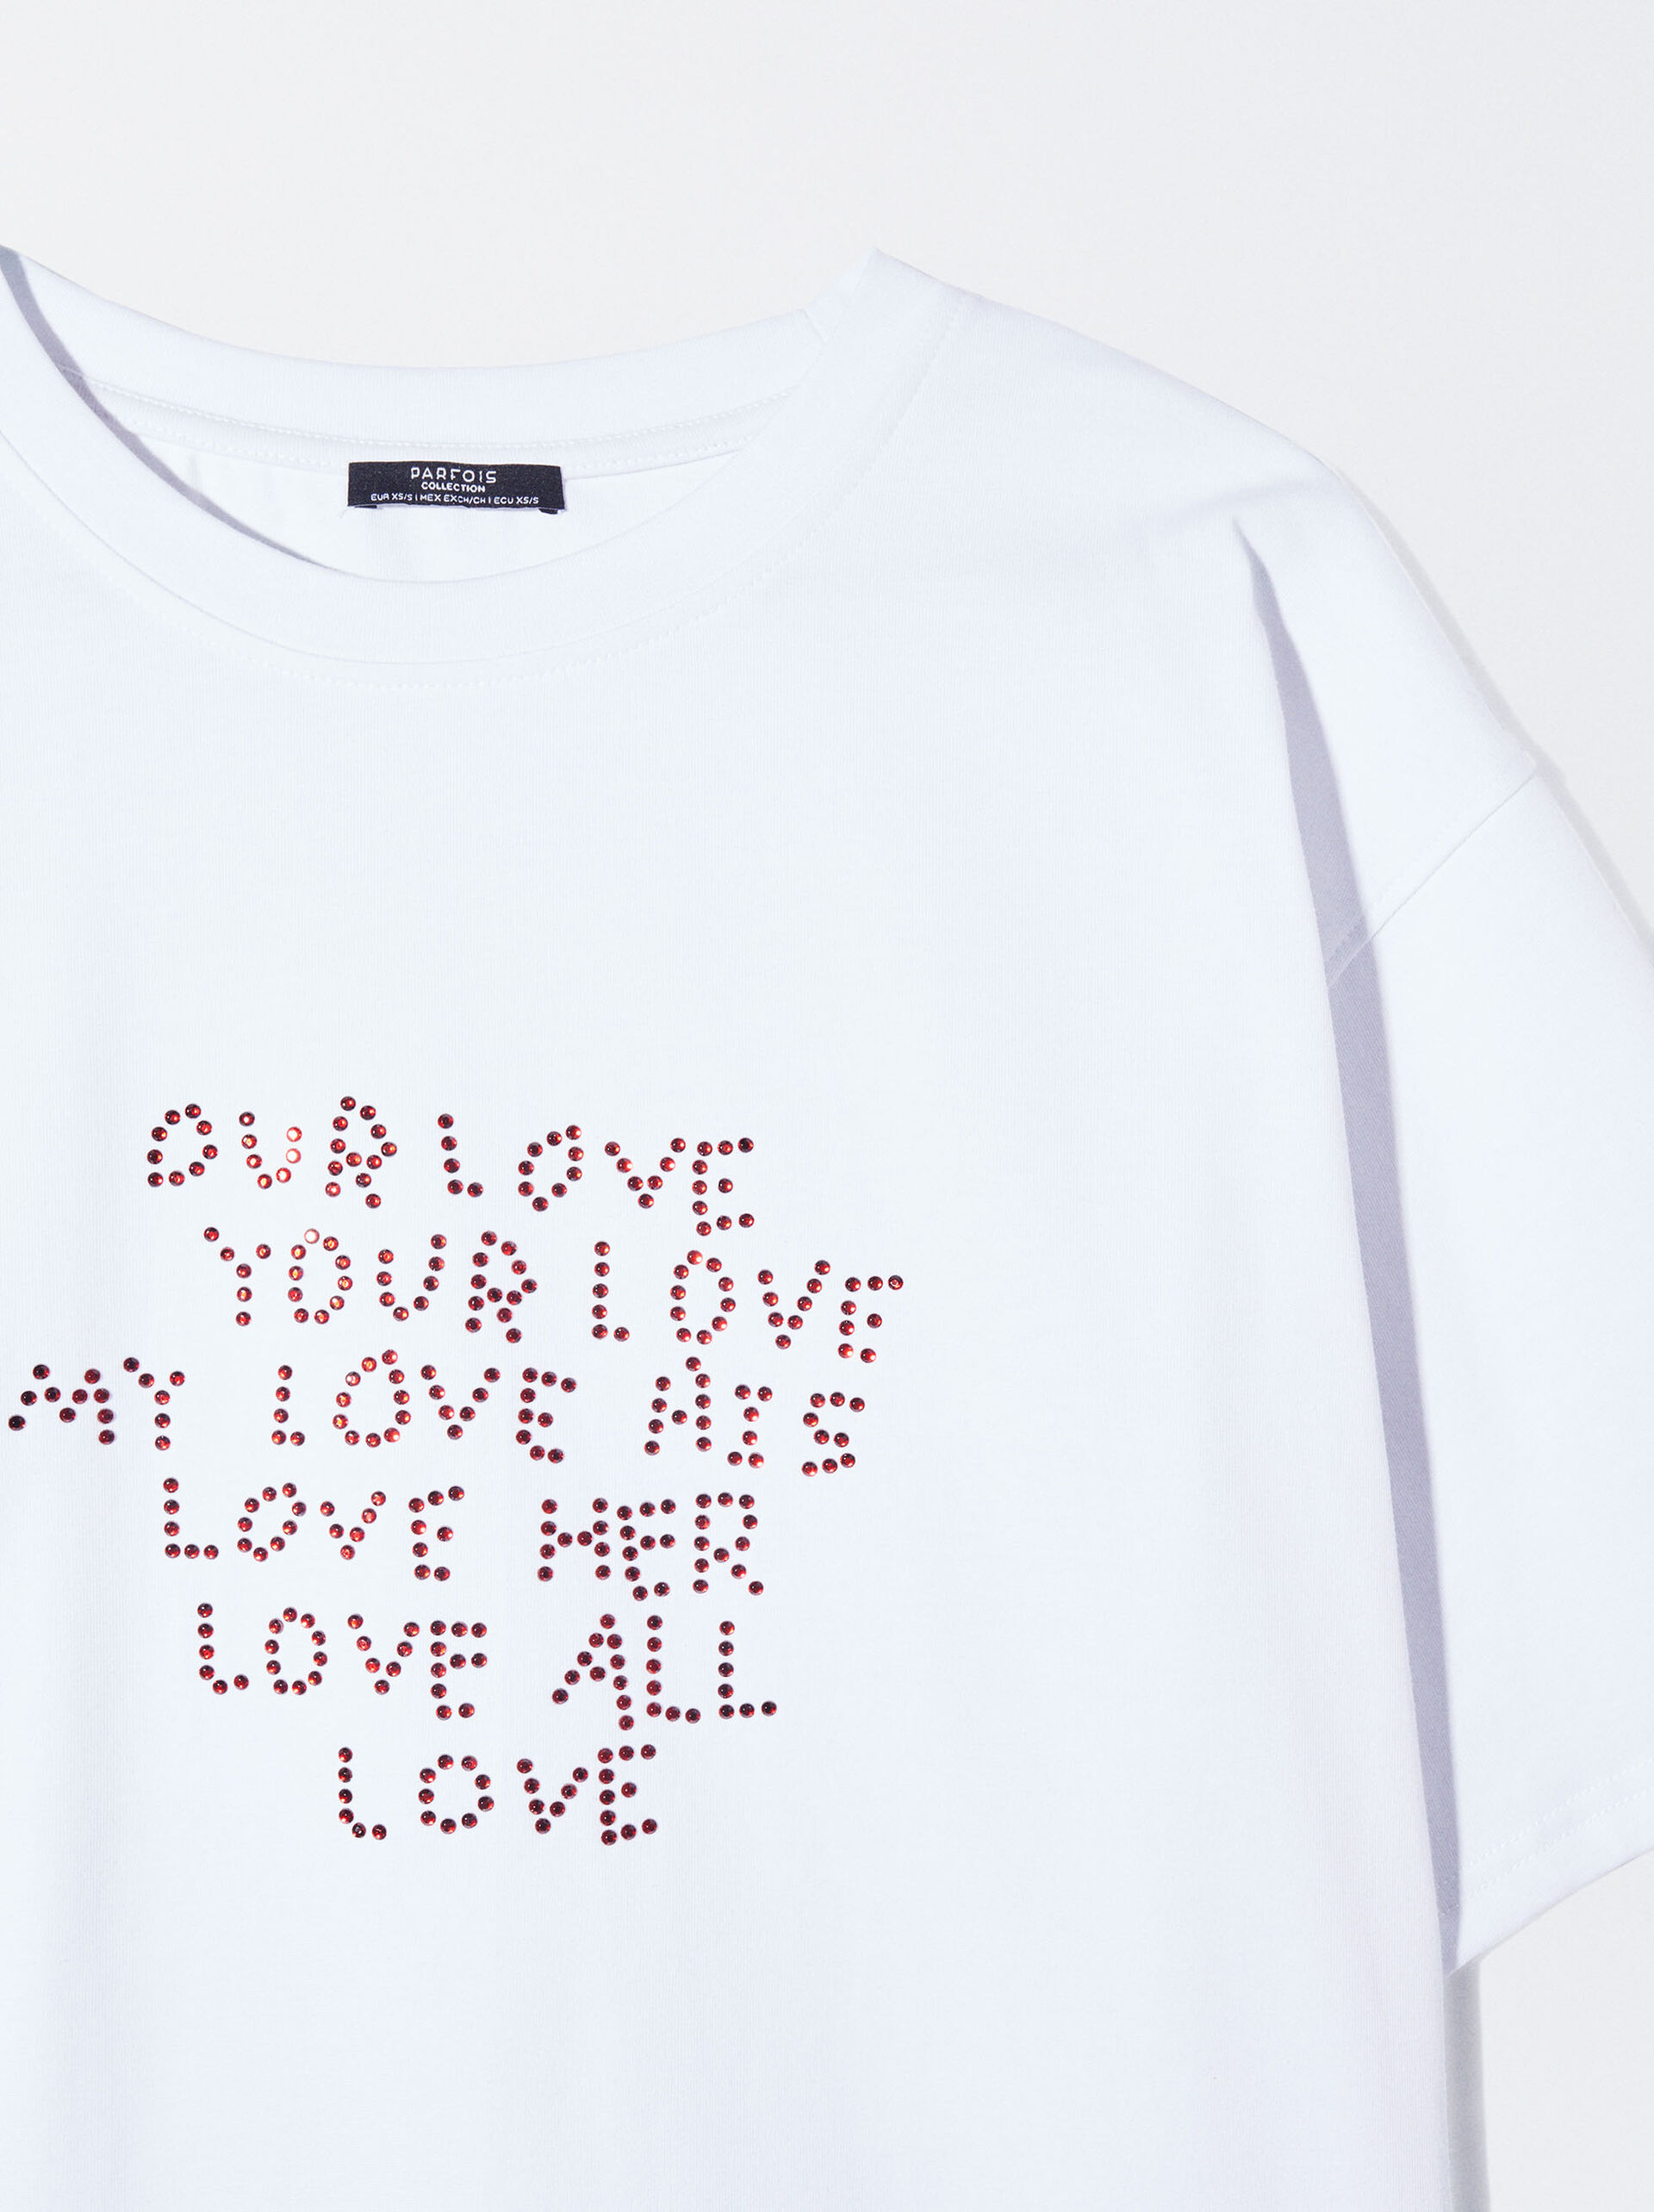 Exclusivo Online - T-Shirt Algodão Love image number 6.0